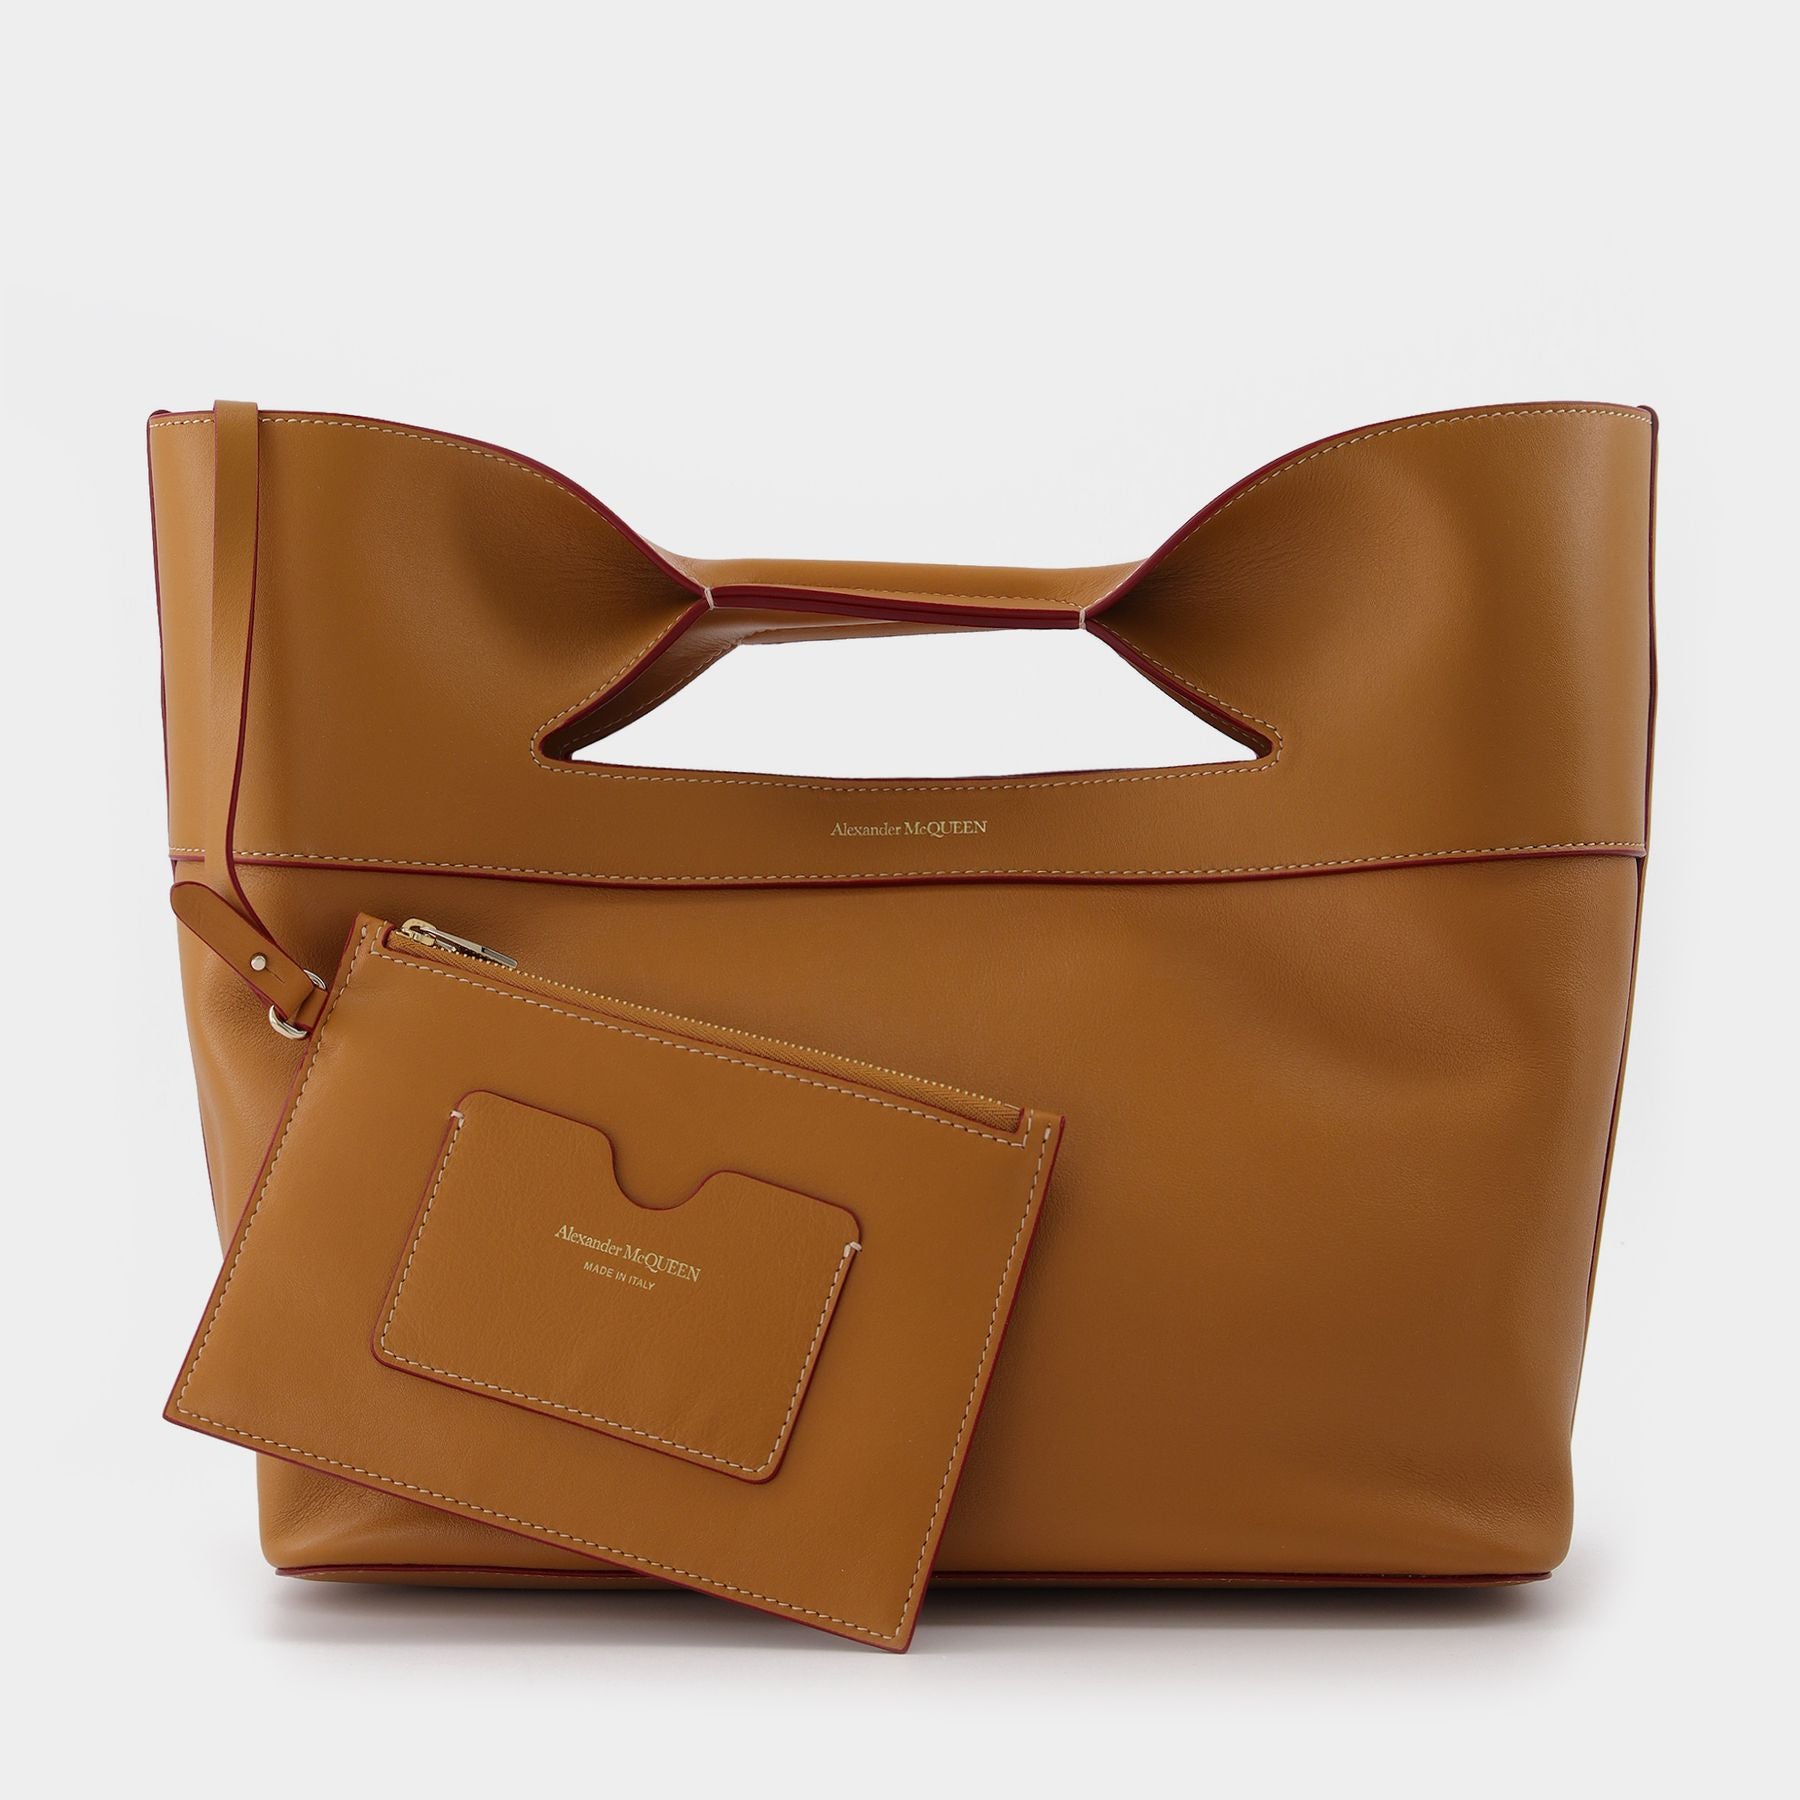 Rita leather handbag